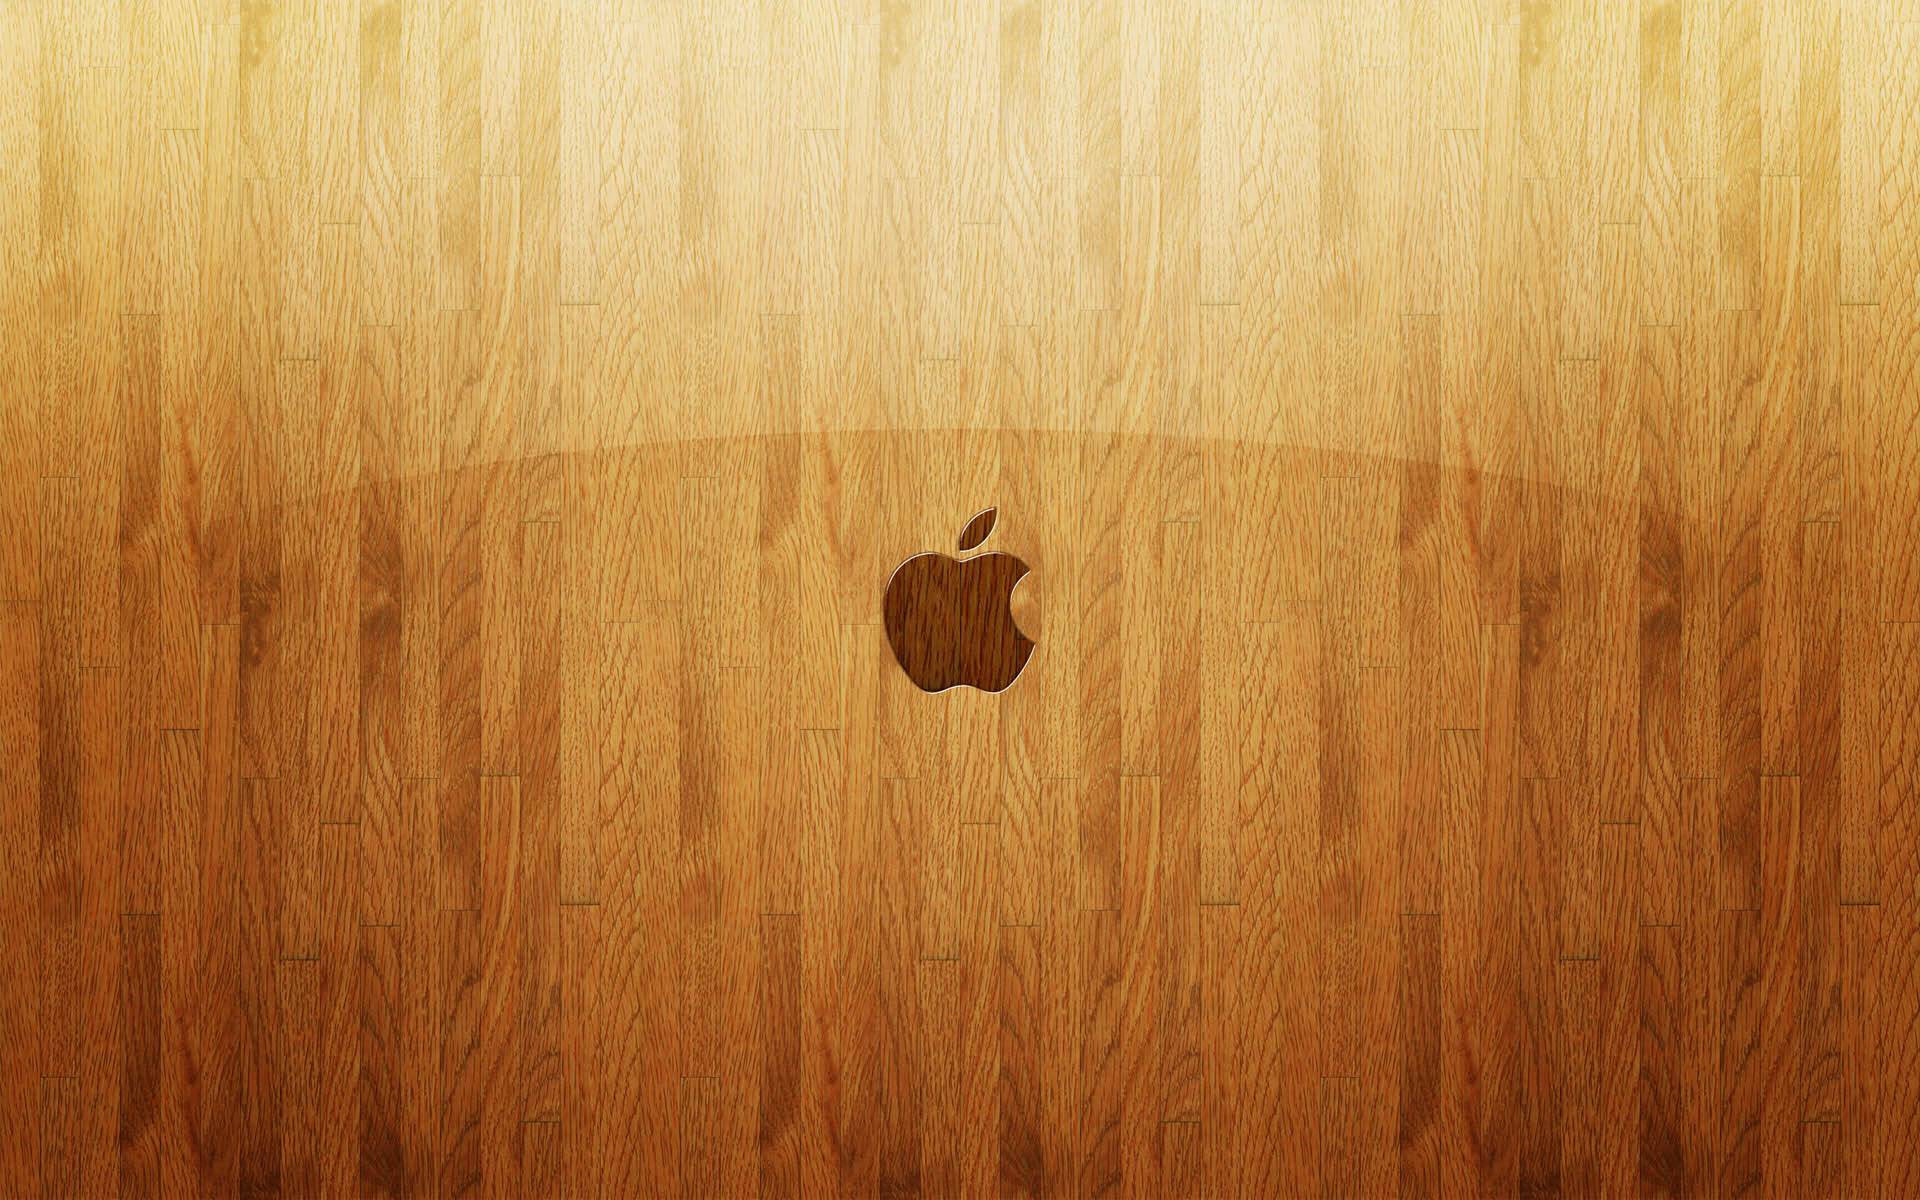 Wooden Iphone Wallpapers